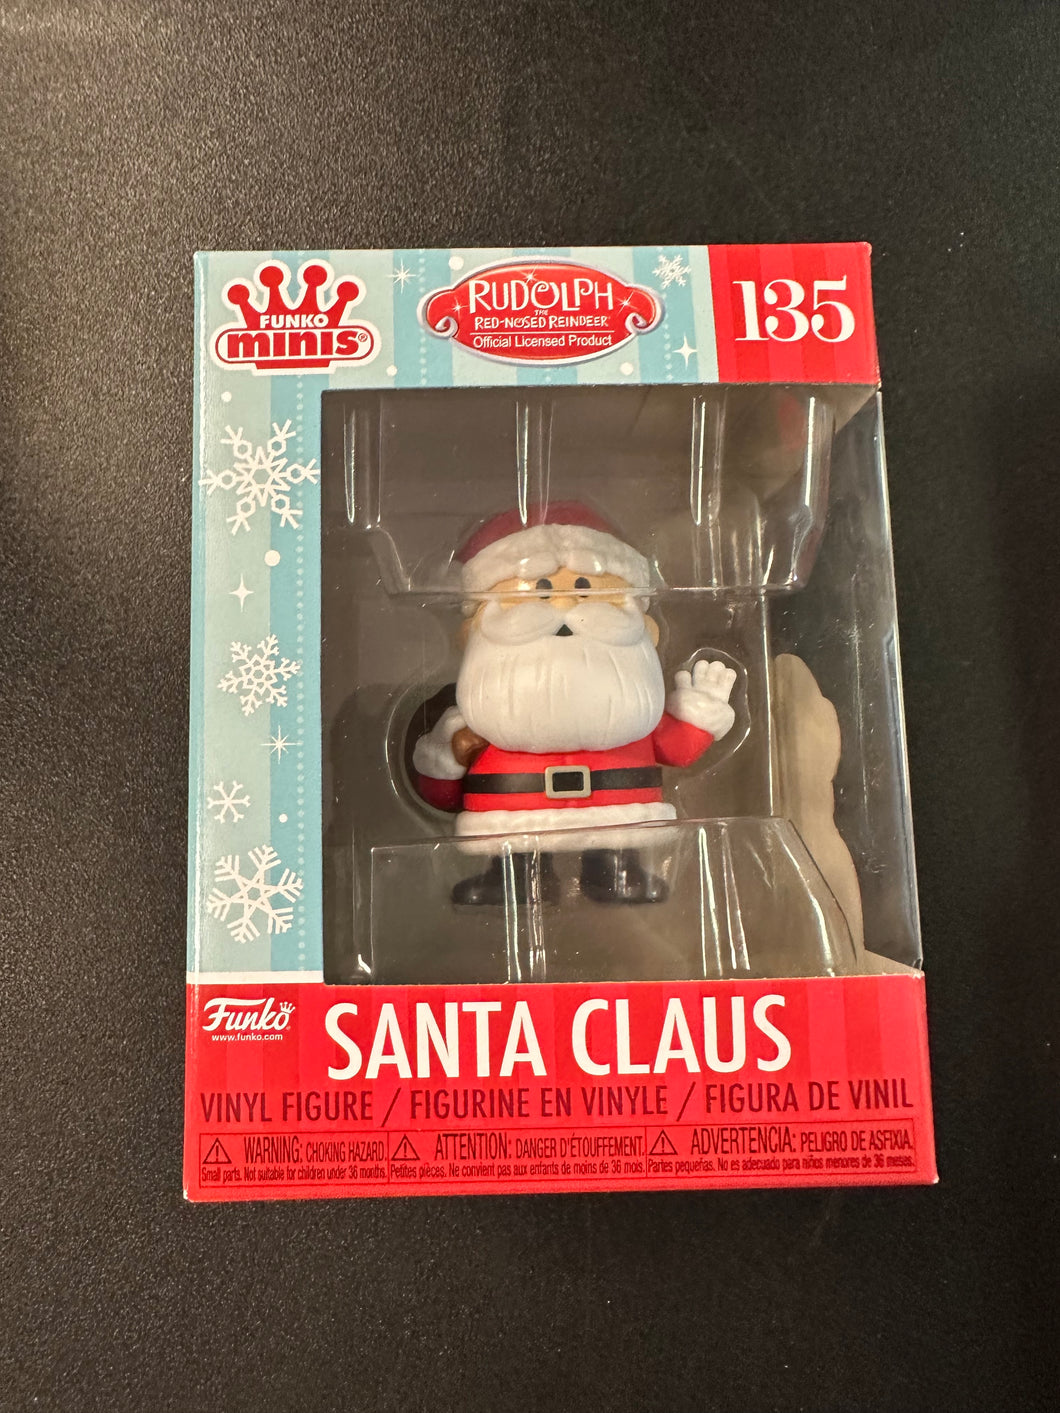 Funko Minis Rudolph Red Nose Reindeer 135 Santa Claus Vinyl Figure